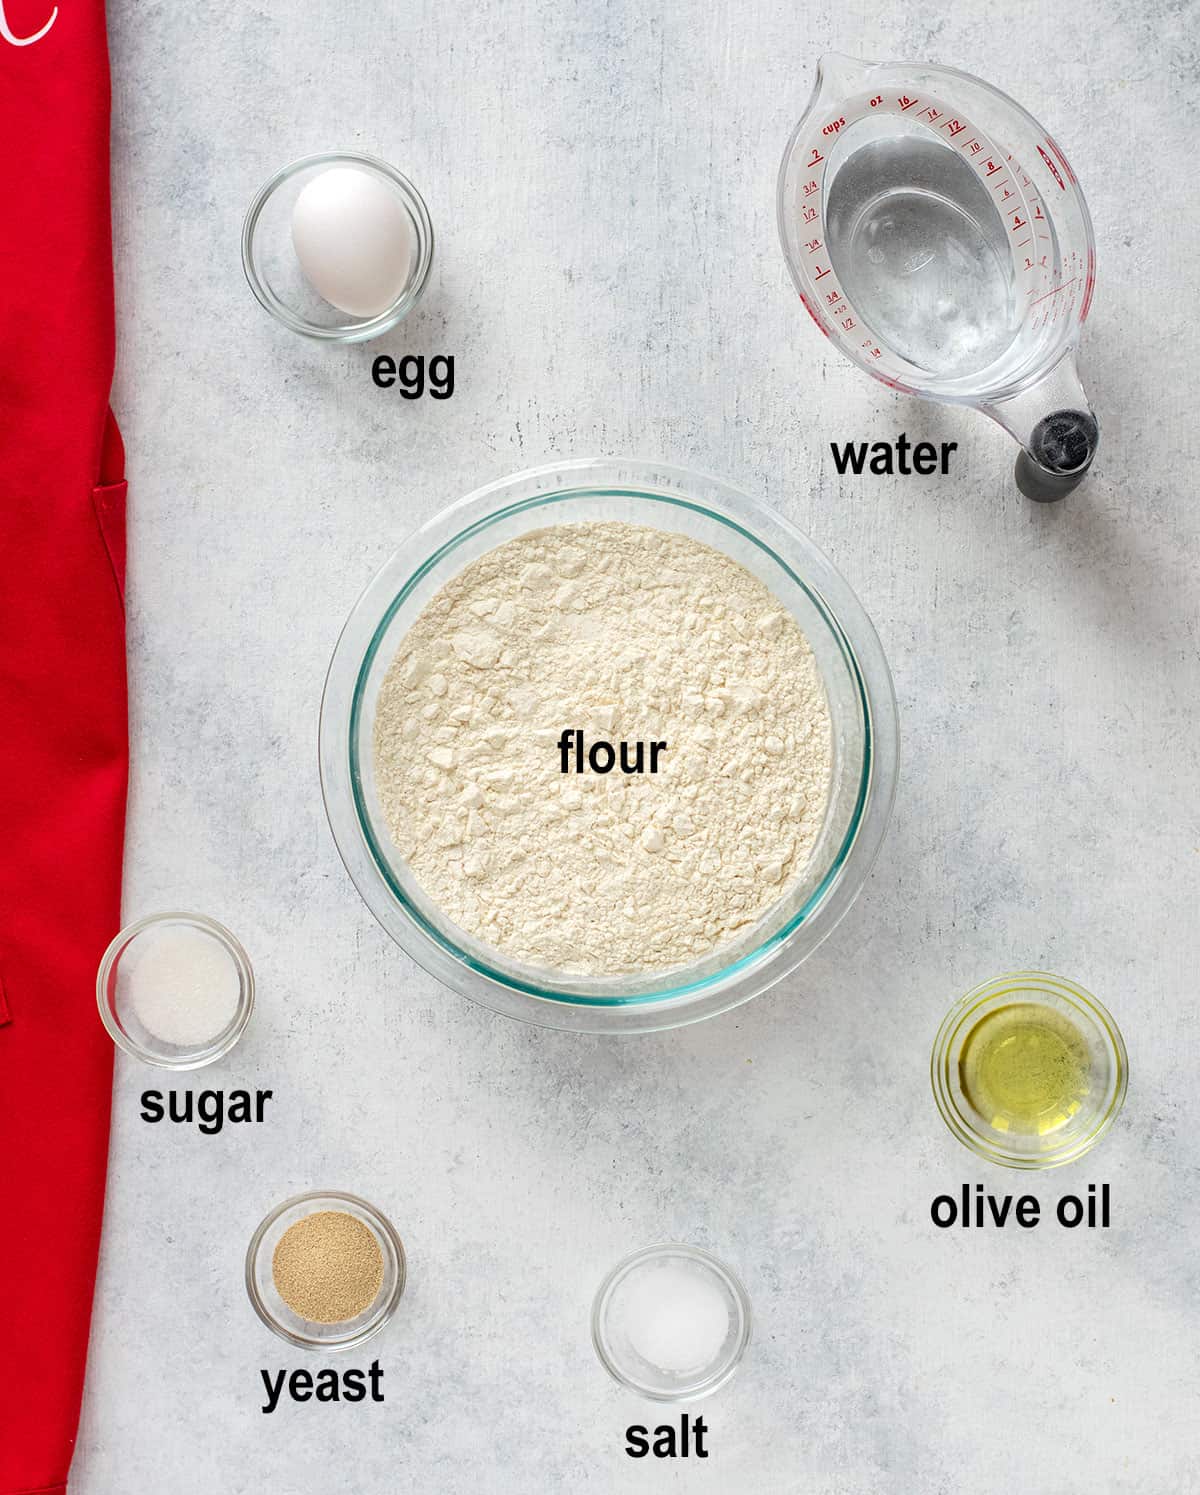 egg, water, flour, sugar, yeast, salt, olive oil